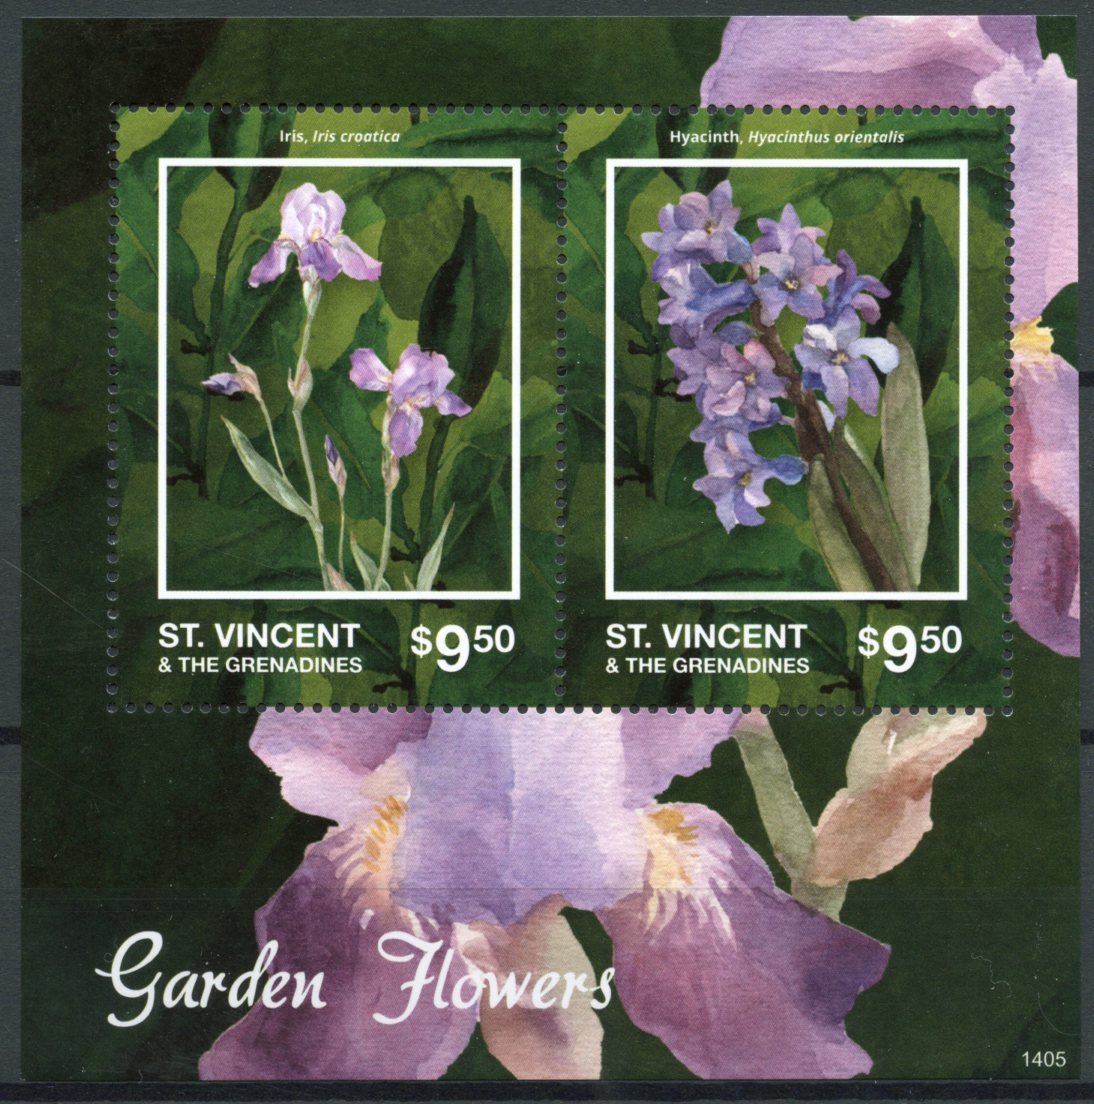 St Vincent & The Grenadines 2014 MNH Garden Flowers II 2v S/S Iris Hyacinth